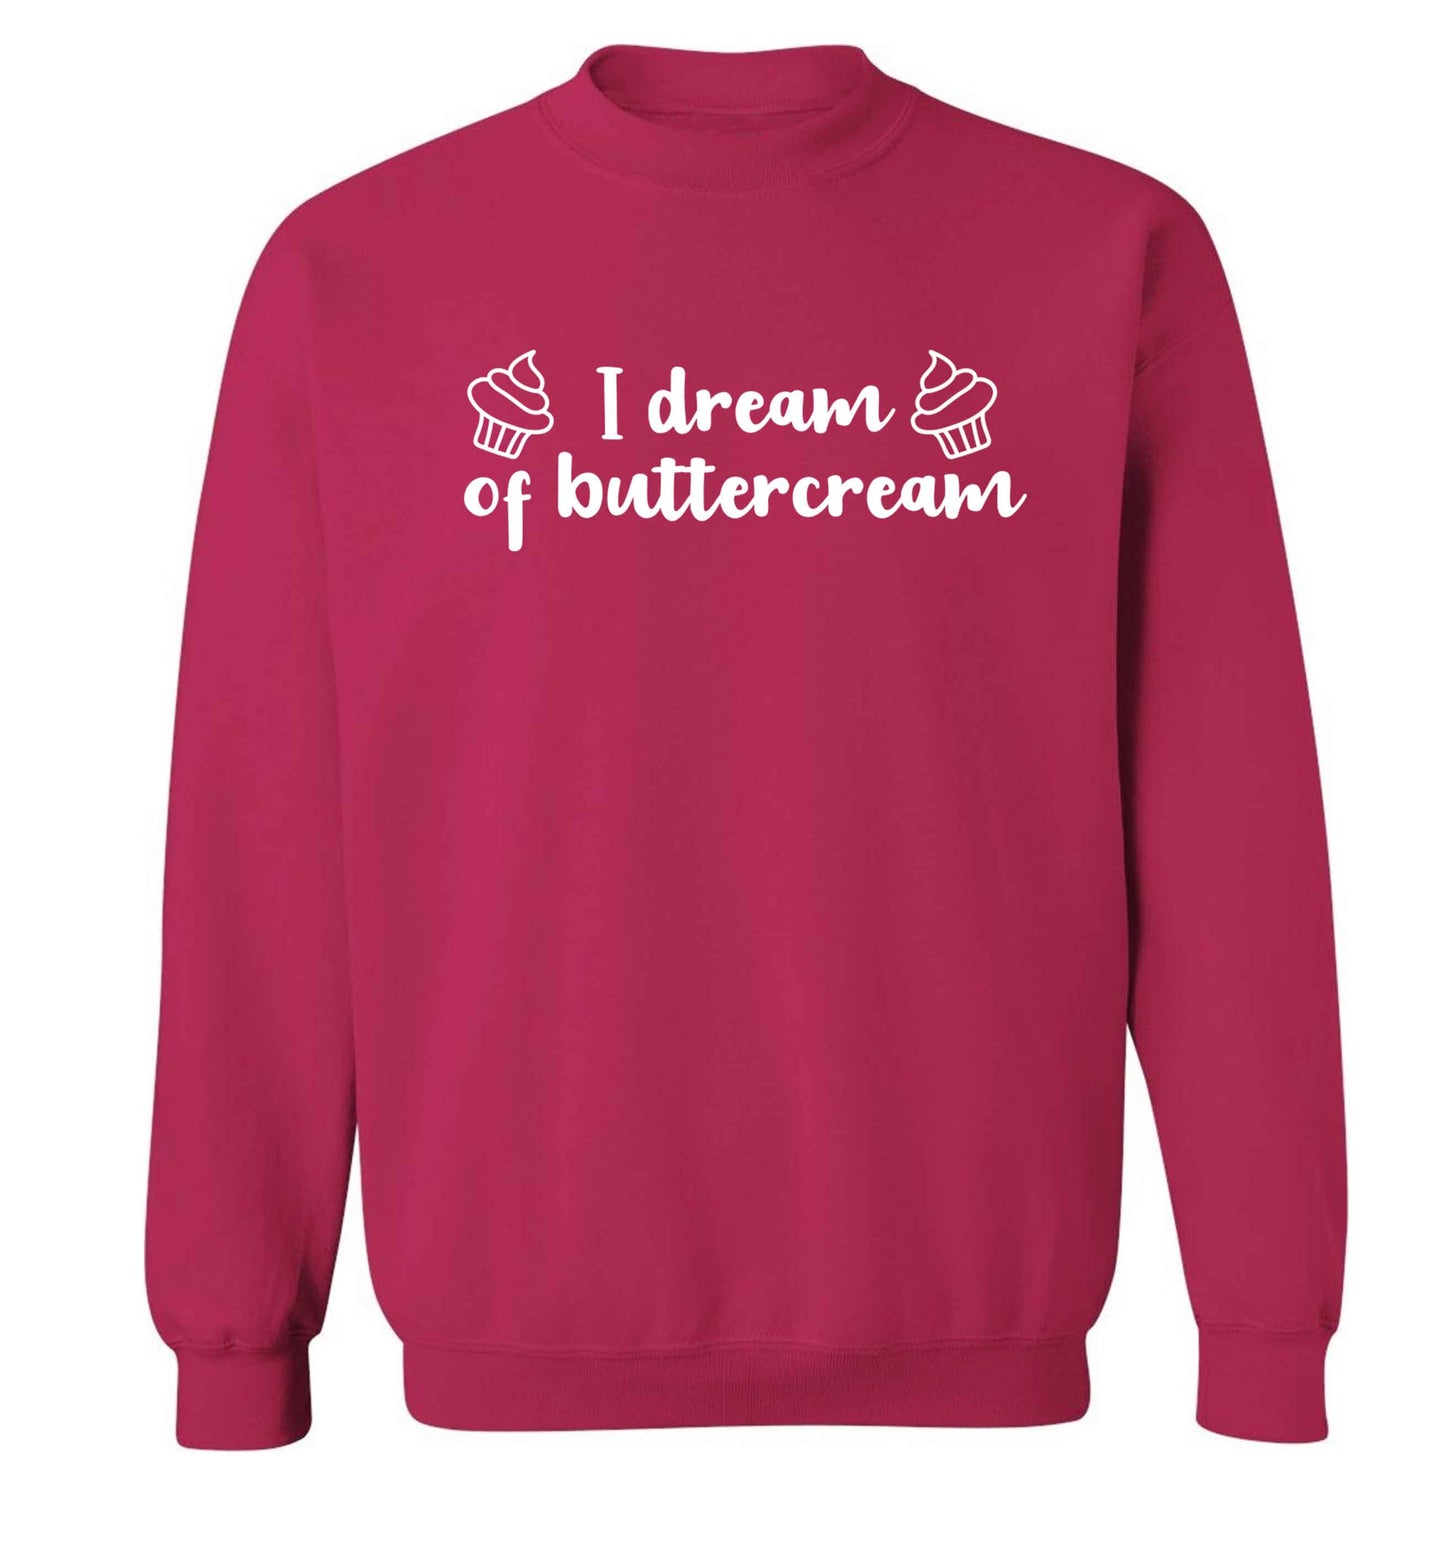 I dream of buttercream Adult's unisex pink Sweater 2XL